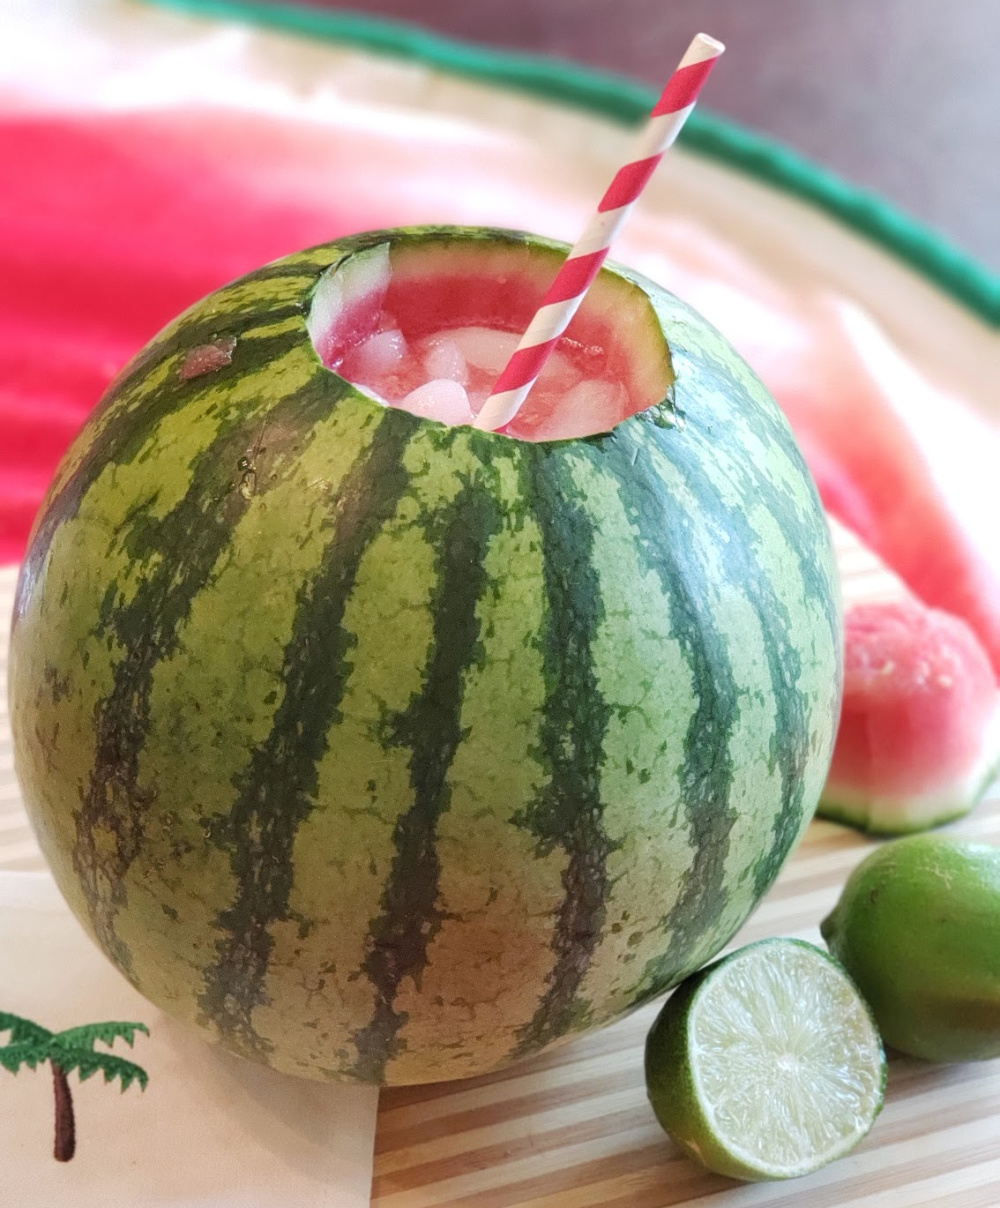 In a Watermelon Margarita